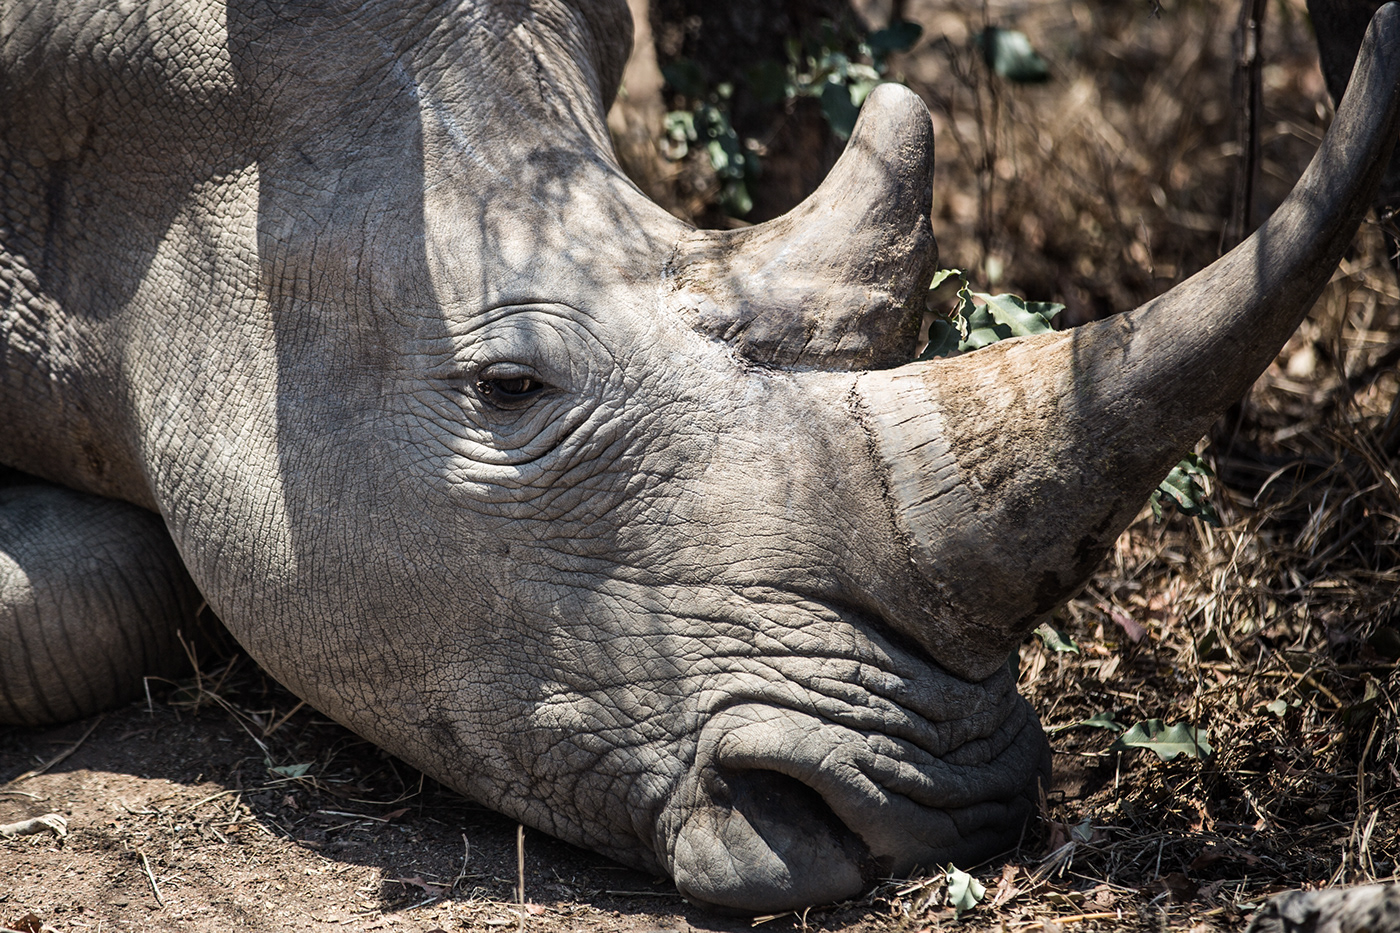 africa black rhino endangered species Eswatini Mkhaya Game Reserve poaching safari Swaziland white rhino wildlife conservation